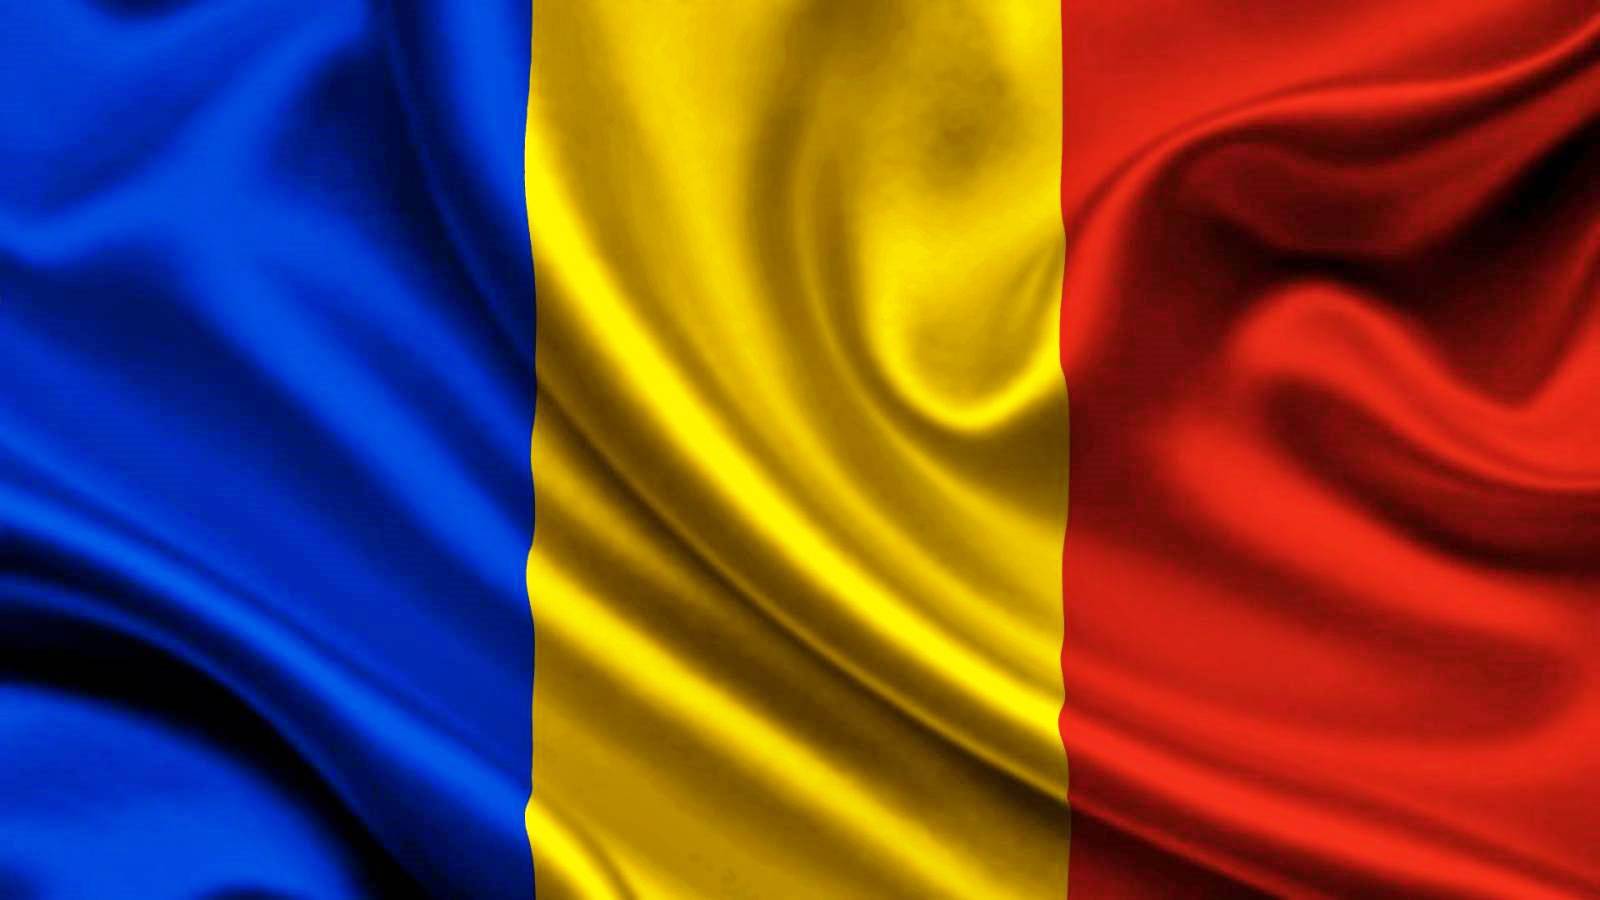 Grupul Lupta NATO Constituie Romania Incepand Mai